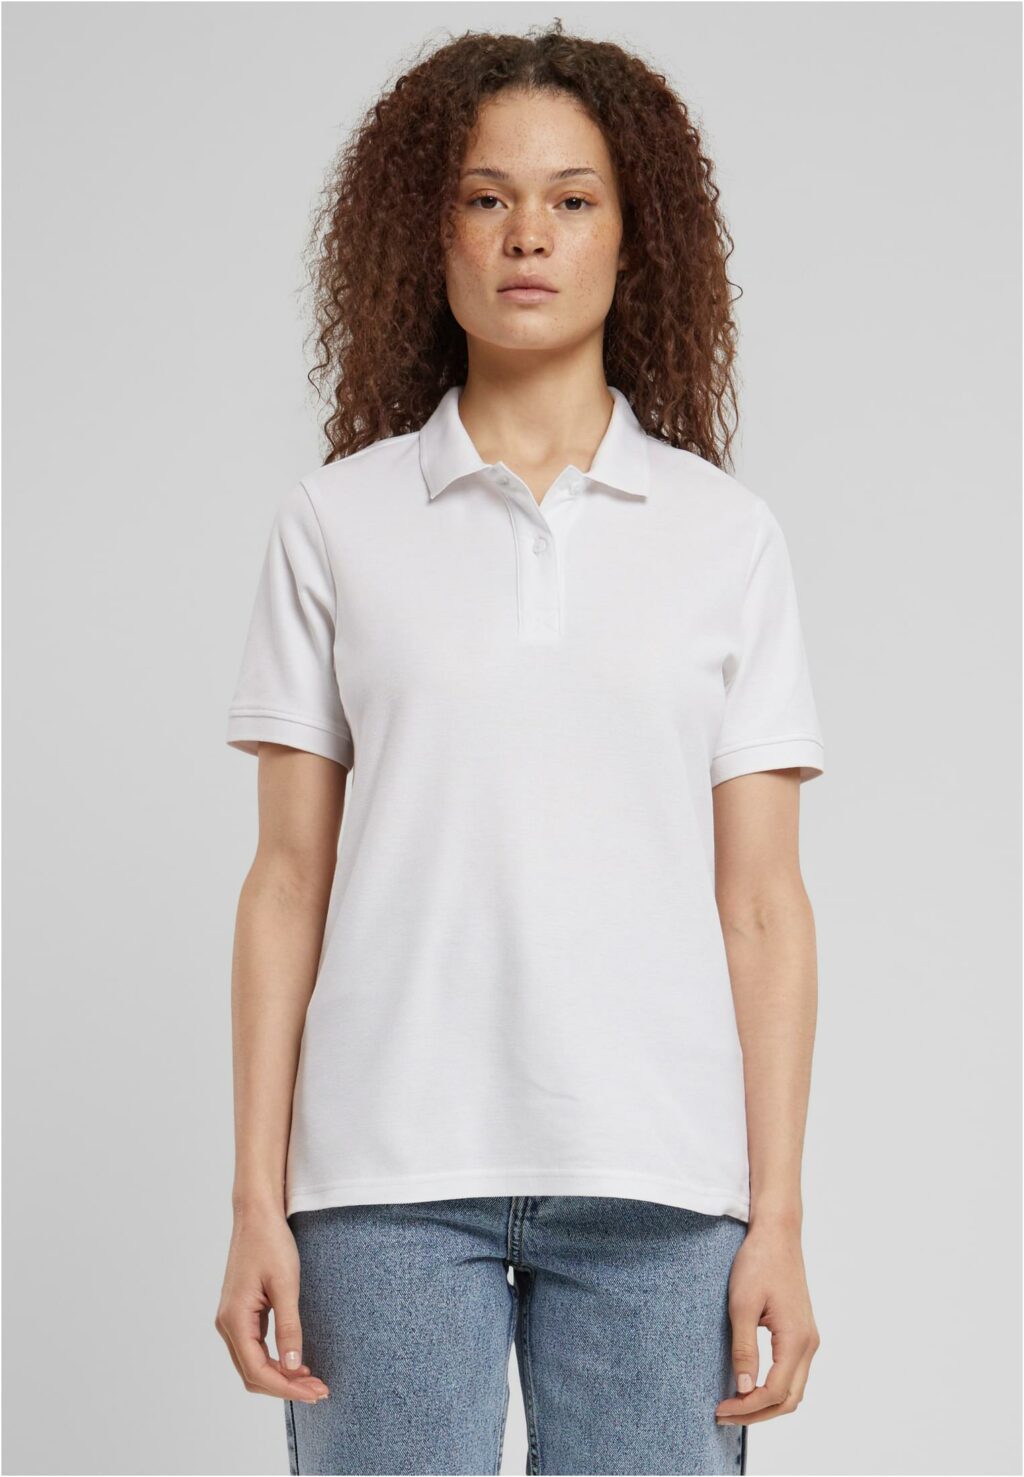 Urban Classics Ladies Polo Shirt white TB6183